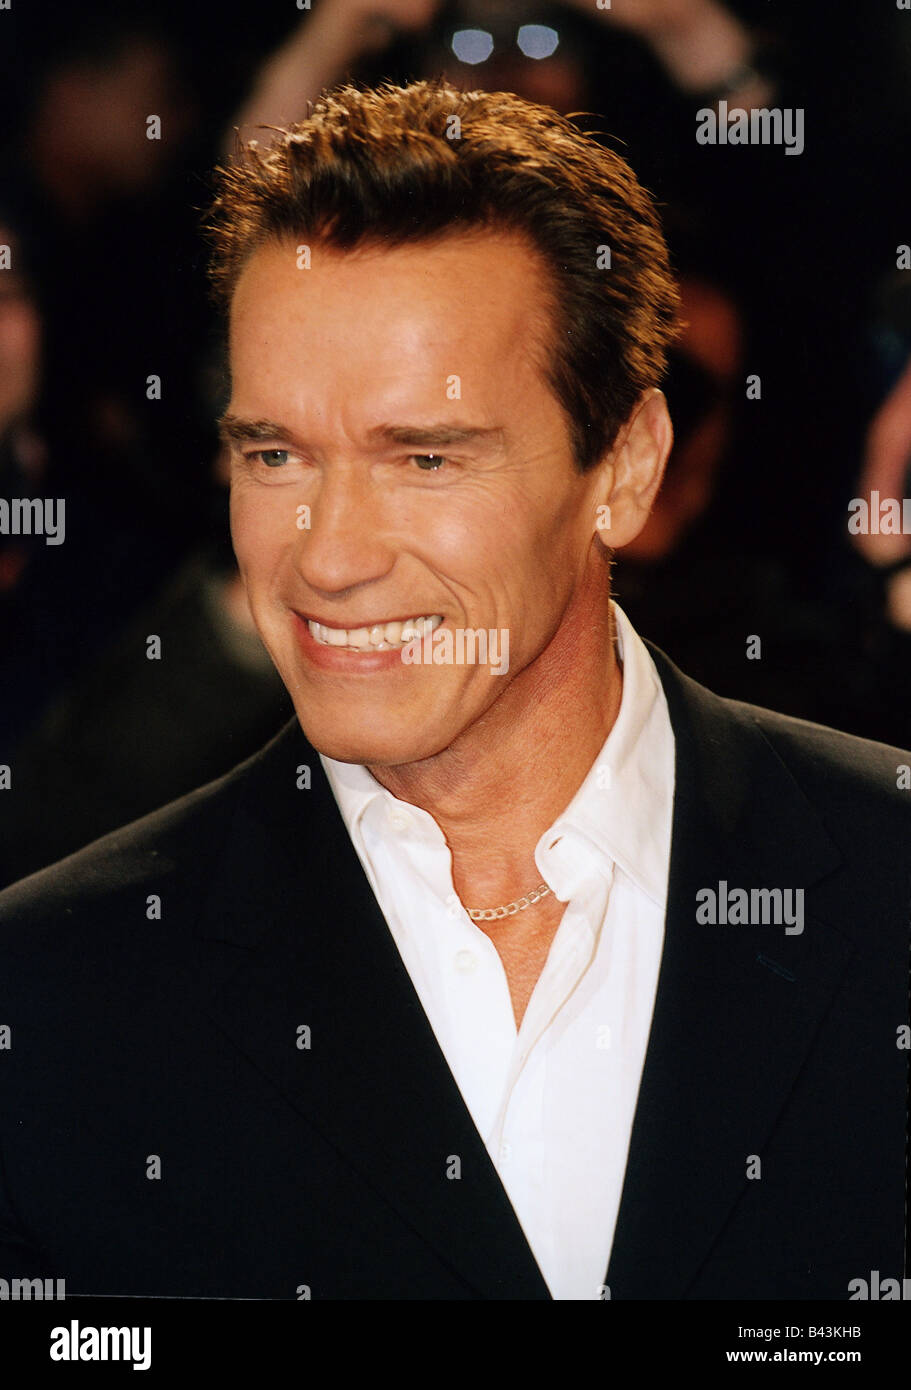 Schwarzenegger, Arnold, * 30.7.1947, Austrian actor, portrait, at film premiere, during International Film Festival Berlin, Berlinale 2002, Stock Photo